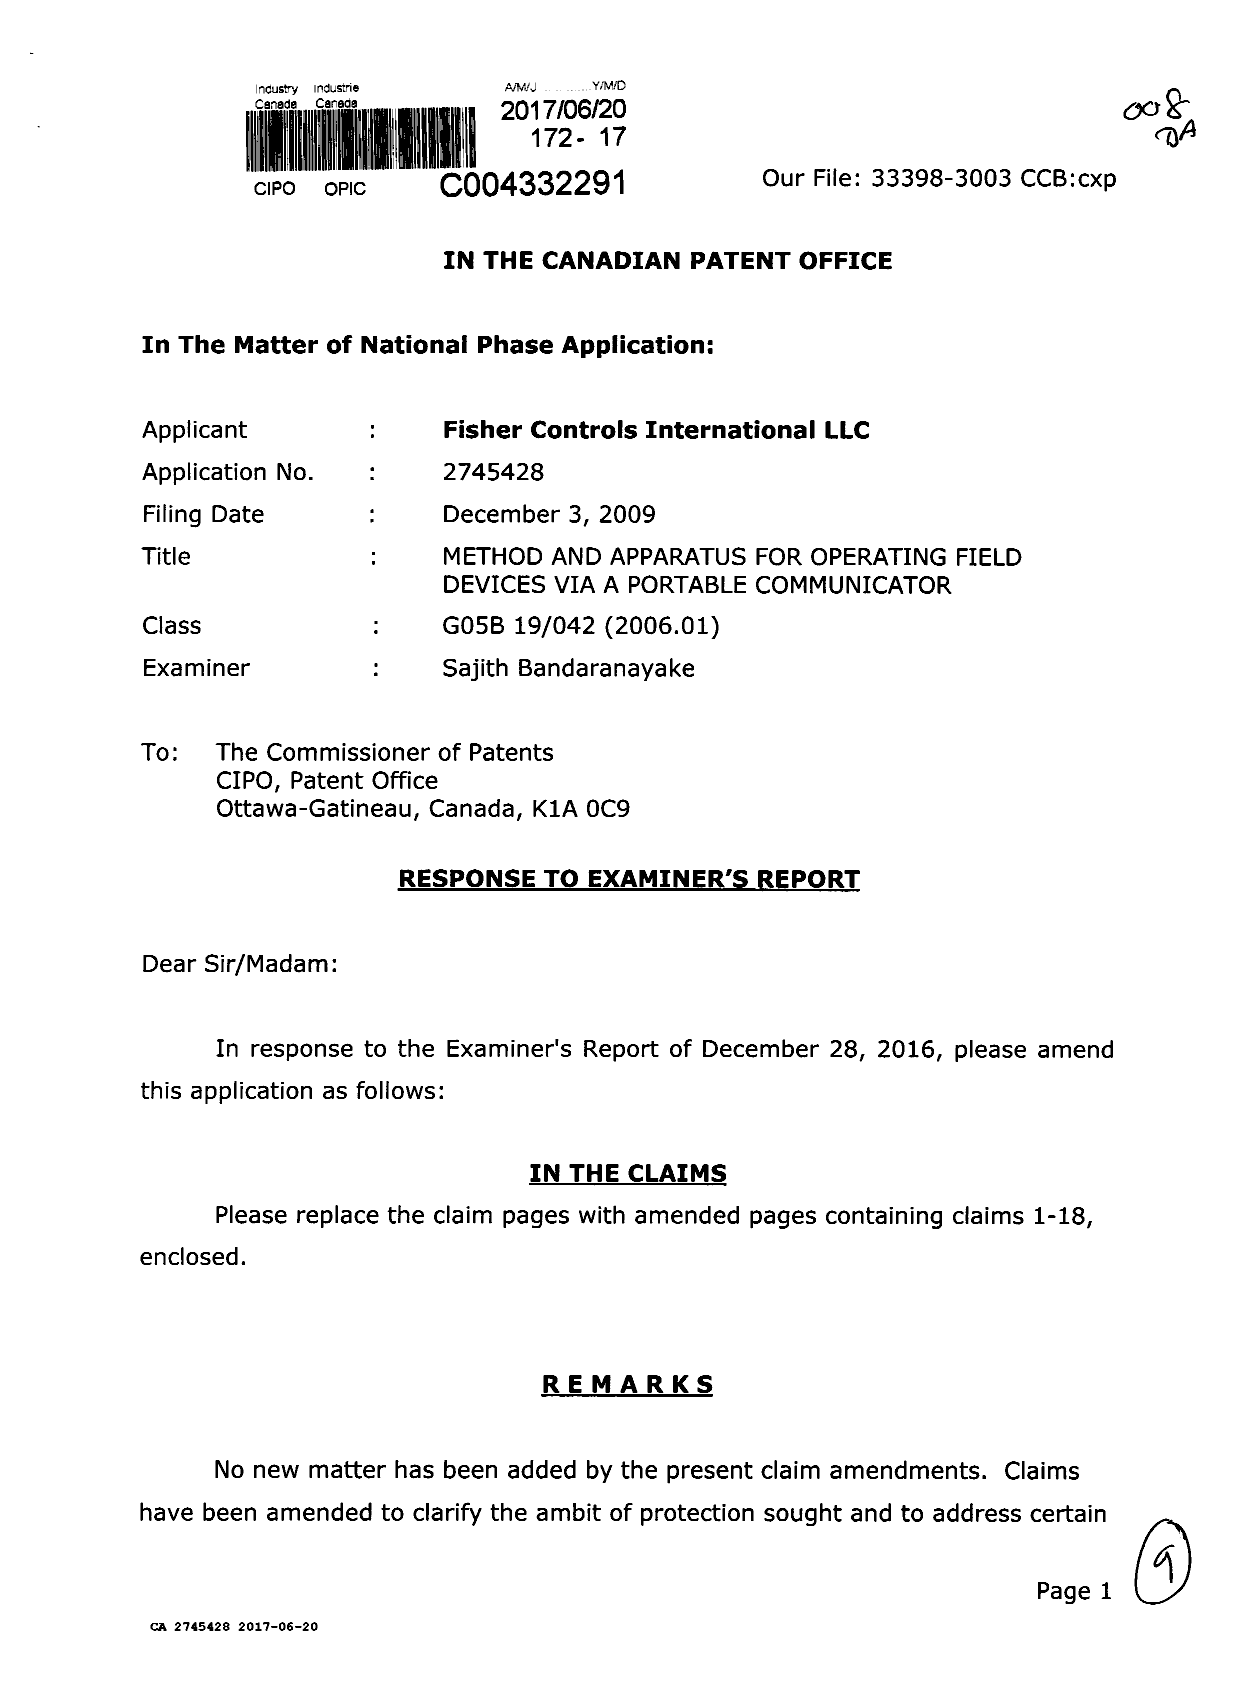 Canadian Patent Document 2745428. Amendment 20170620. Image 1 of 9